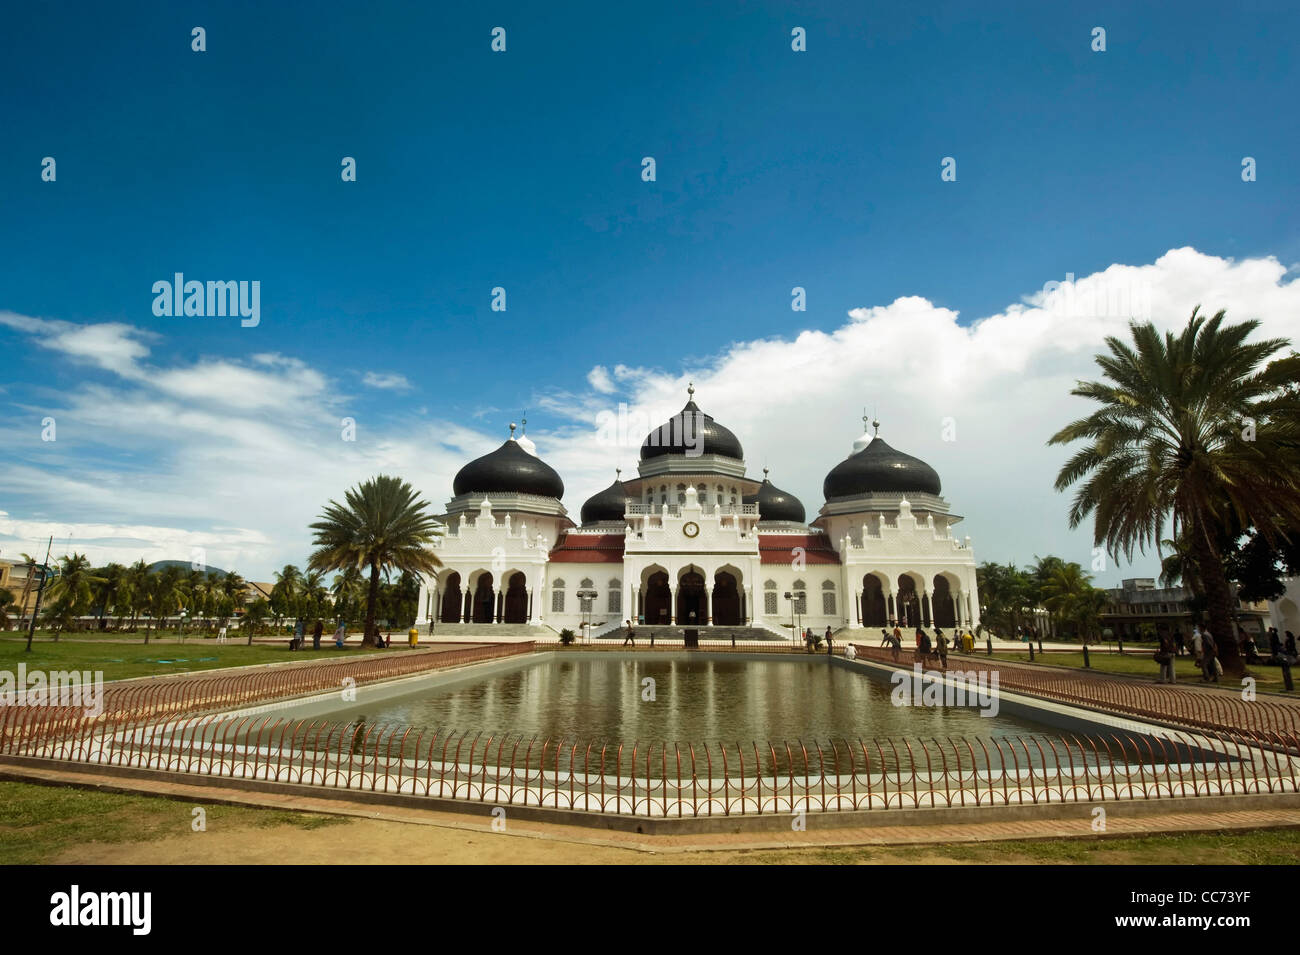 Indonesia, Sumatra, Banda Aceh, Baiturrahman Grand Mosque (Mesjid Raya Baiturrahman) against blue sky Stock Photo